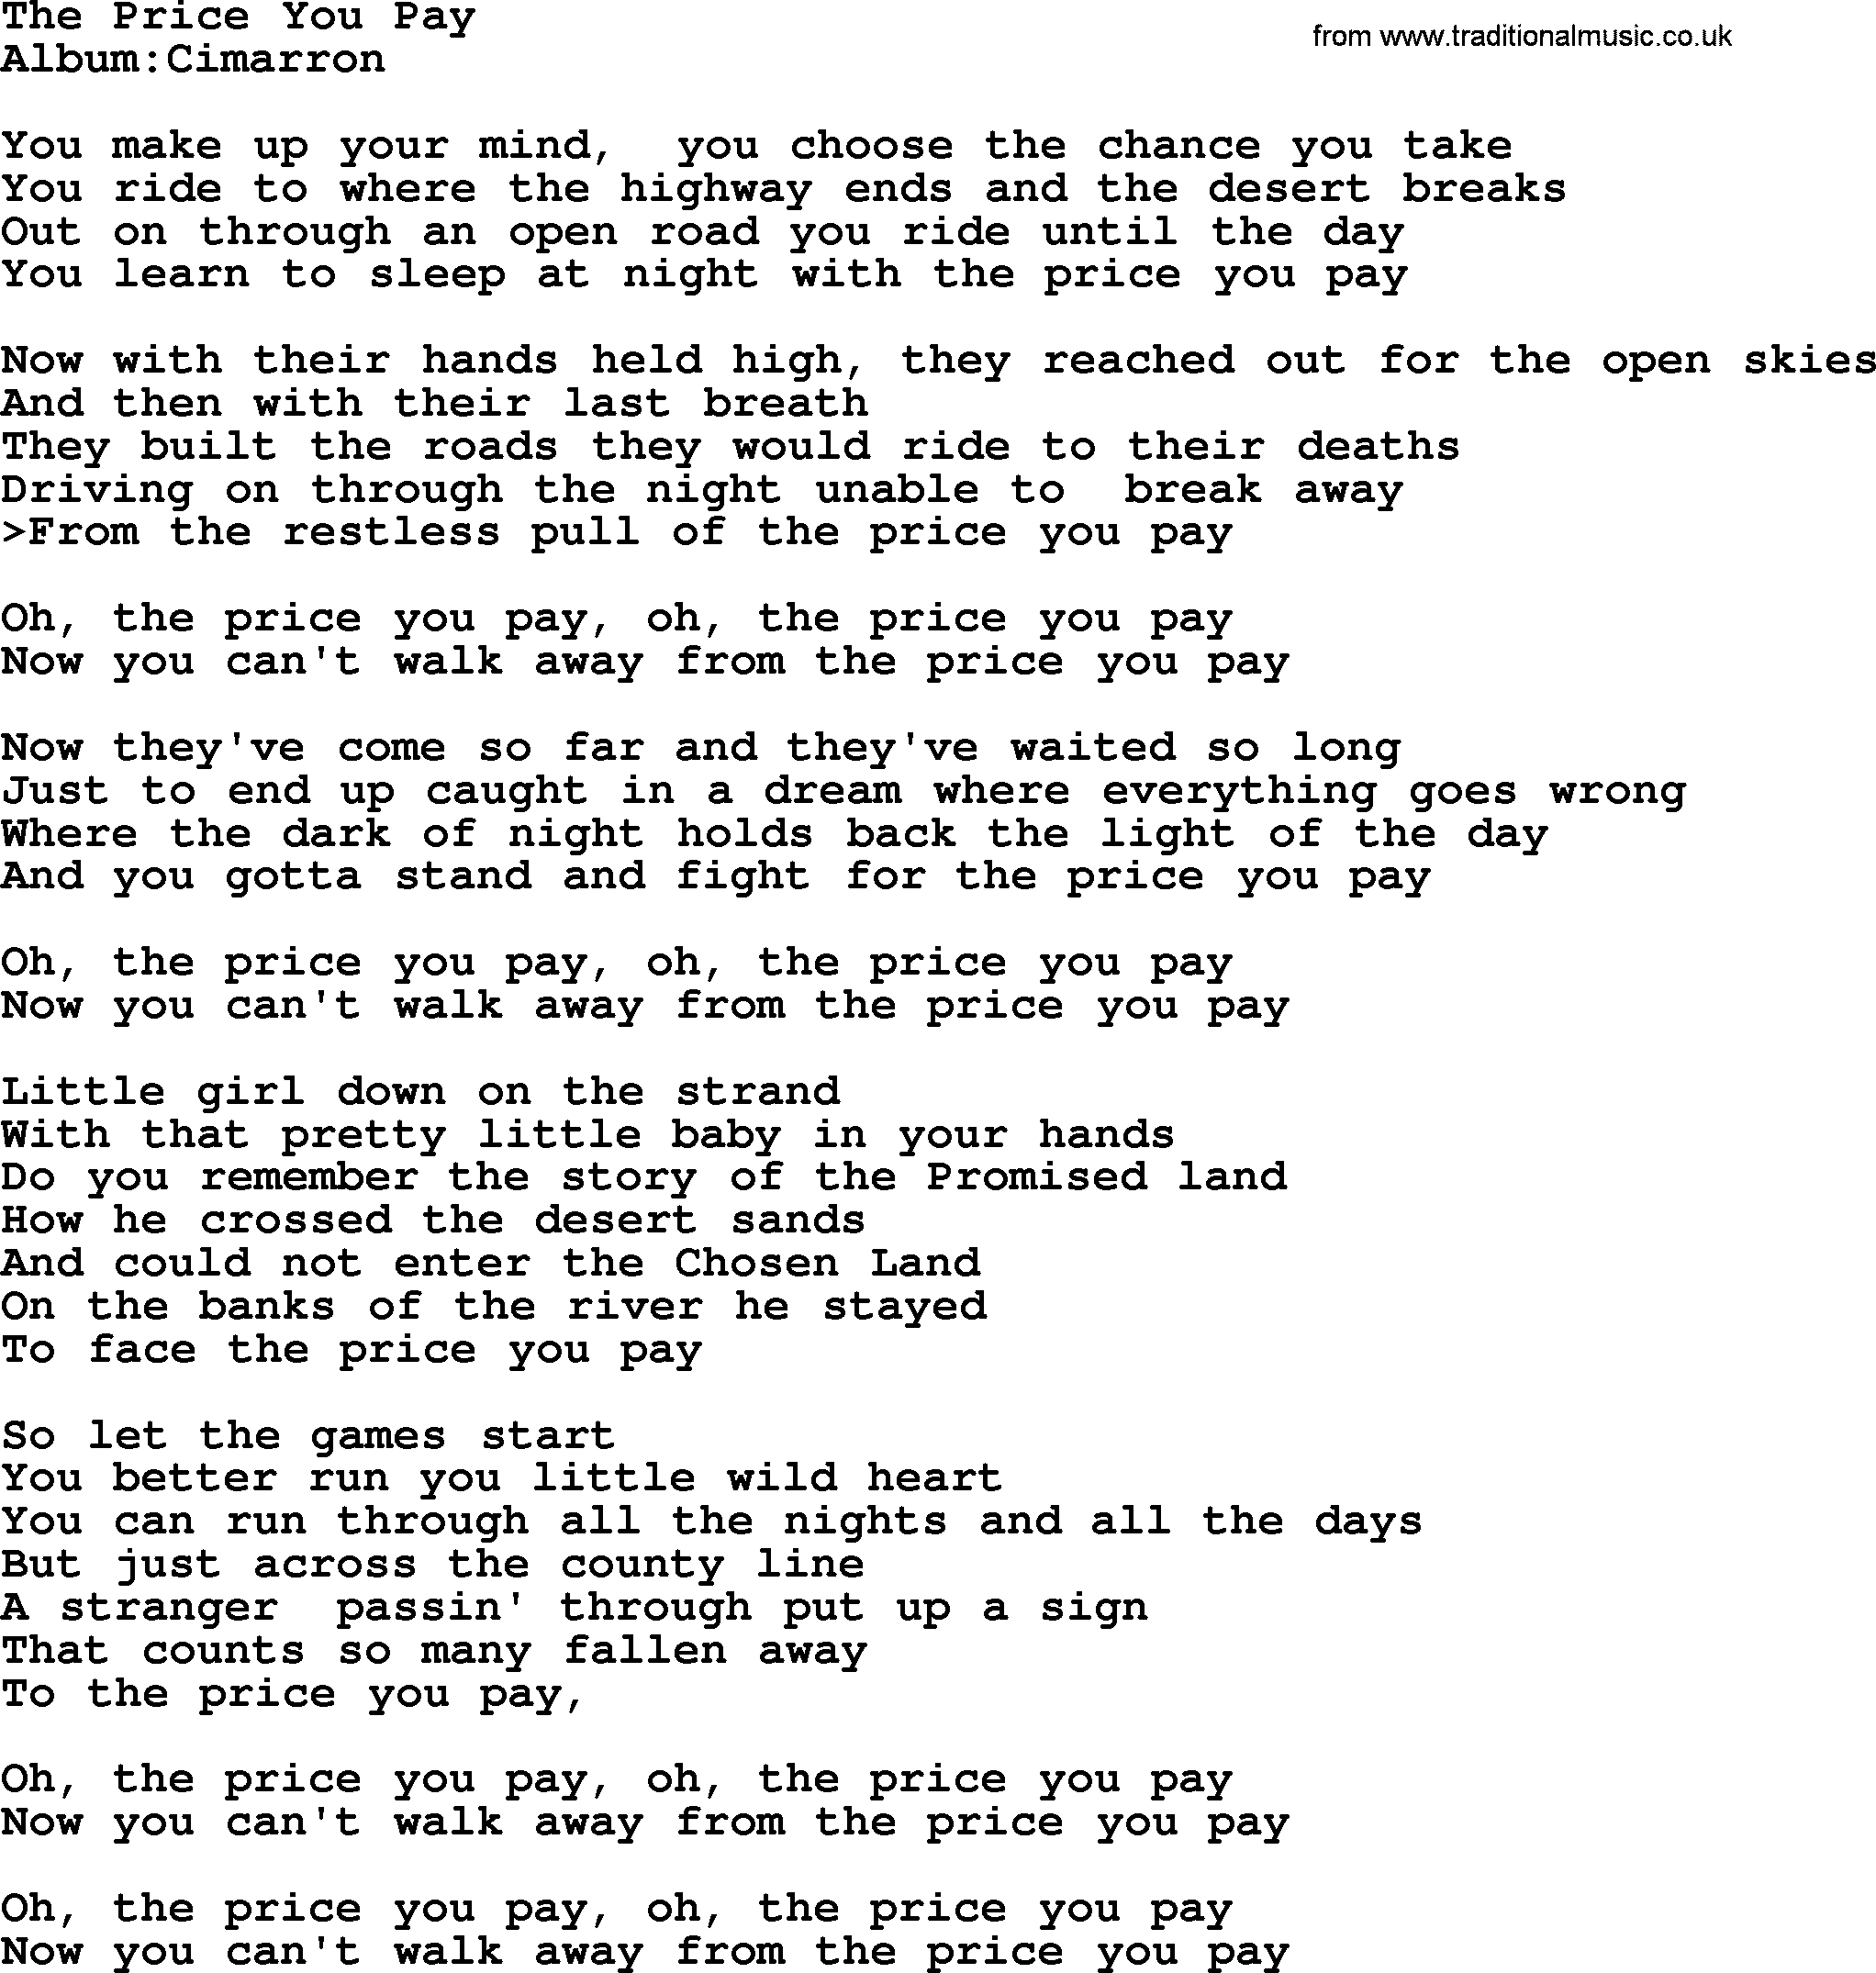 Emmylou Harris song: The Price You Pay lyrics